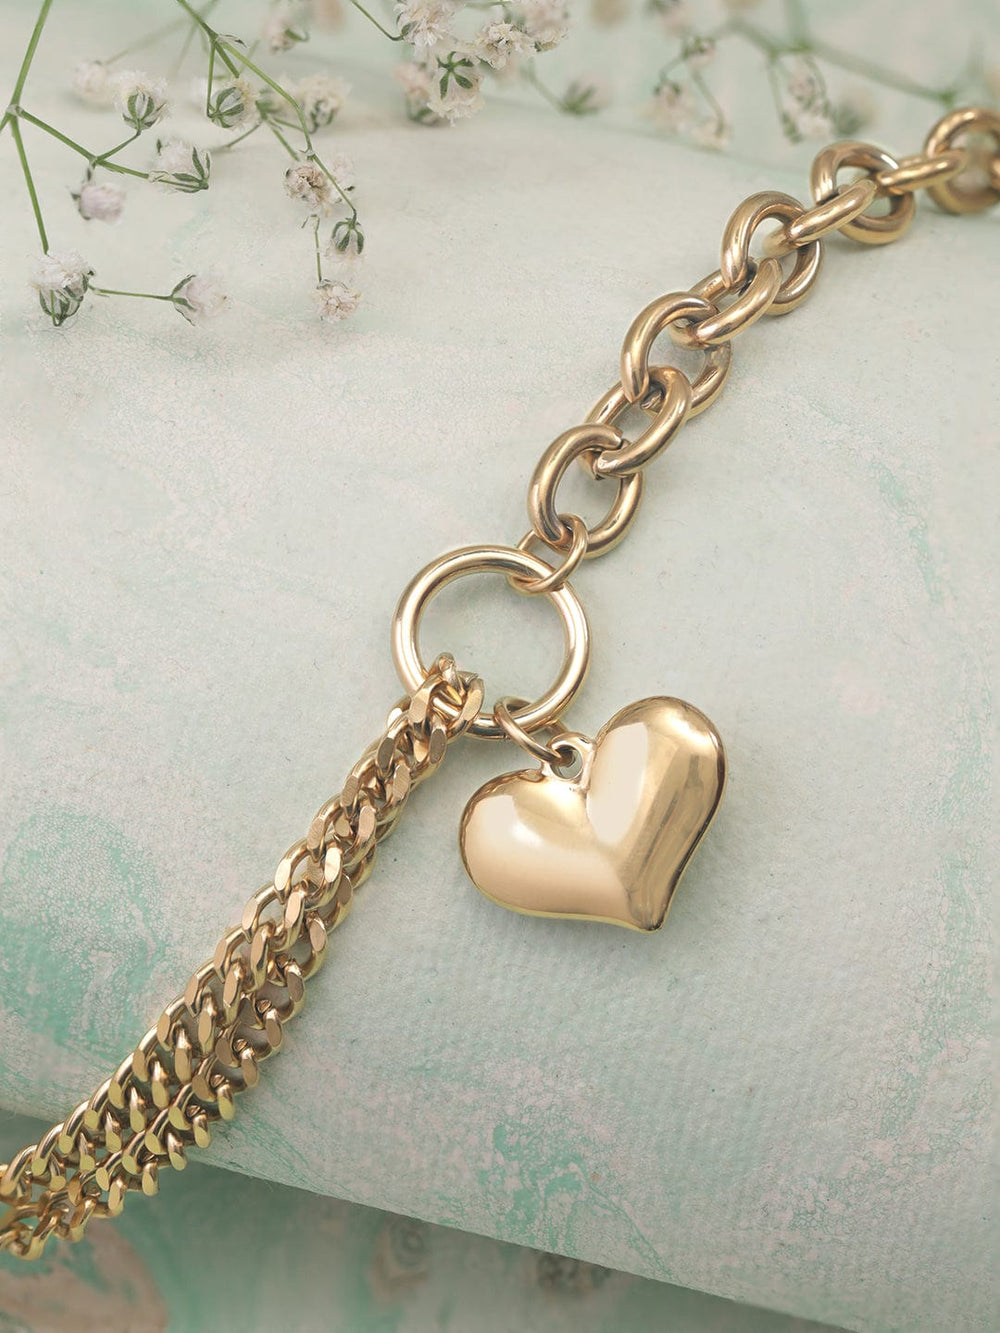 Rubans Voguish Brass 18K Gold-Plated Link Bracelet Bangles & Bracelets